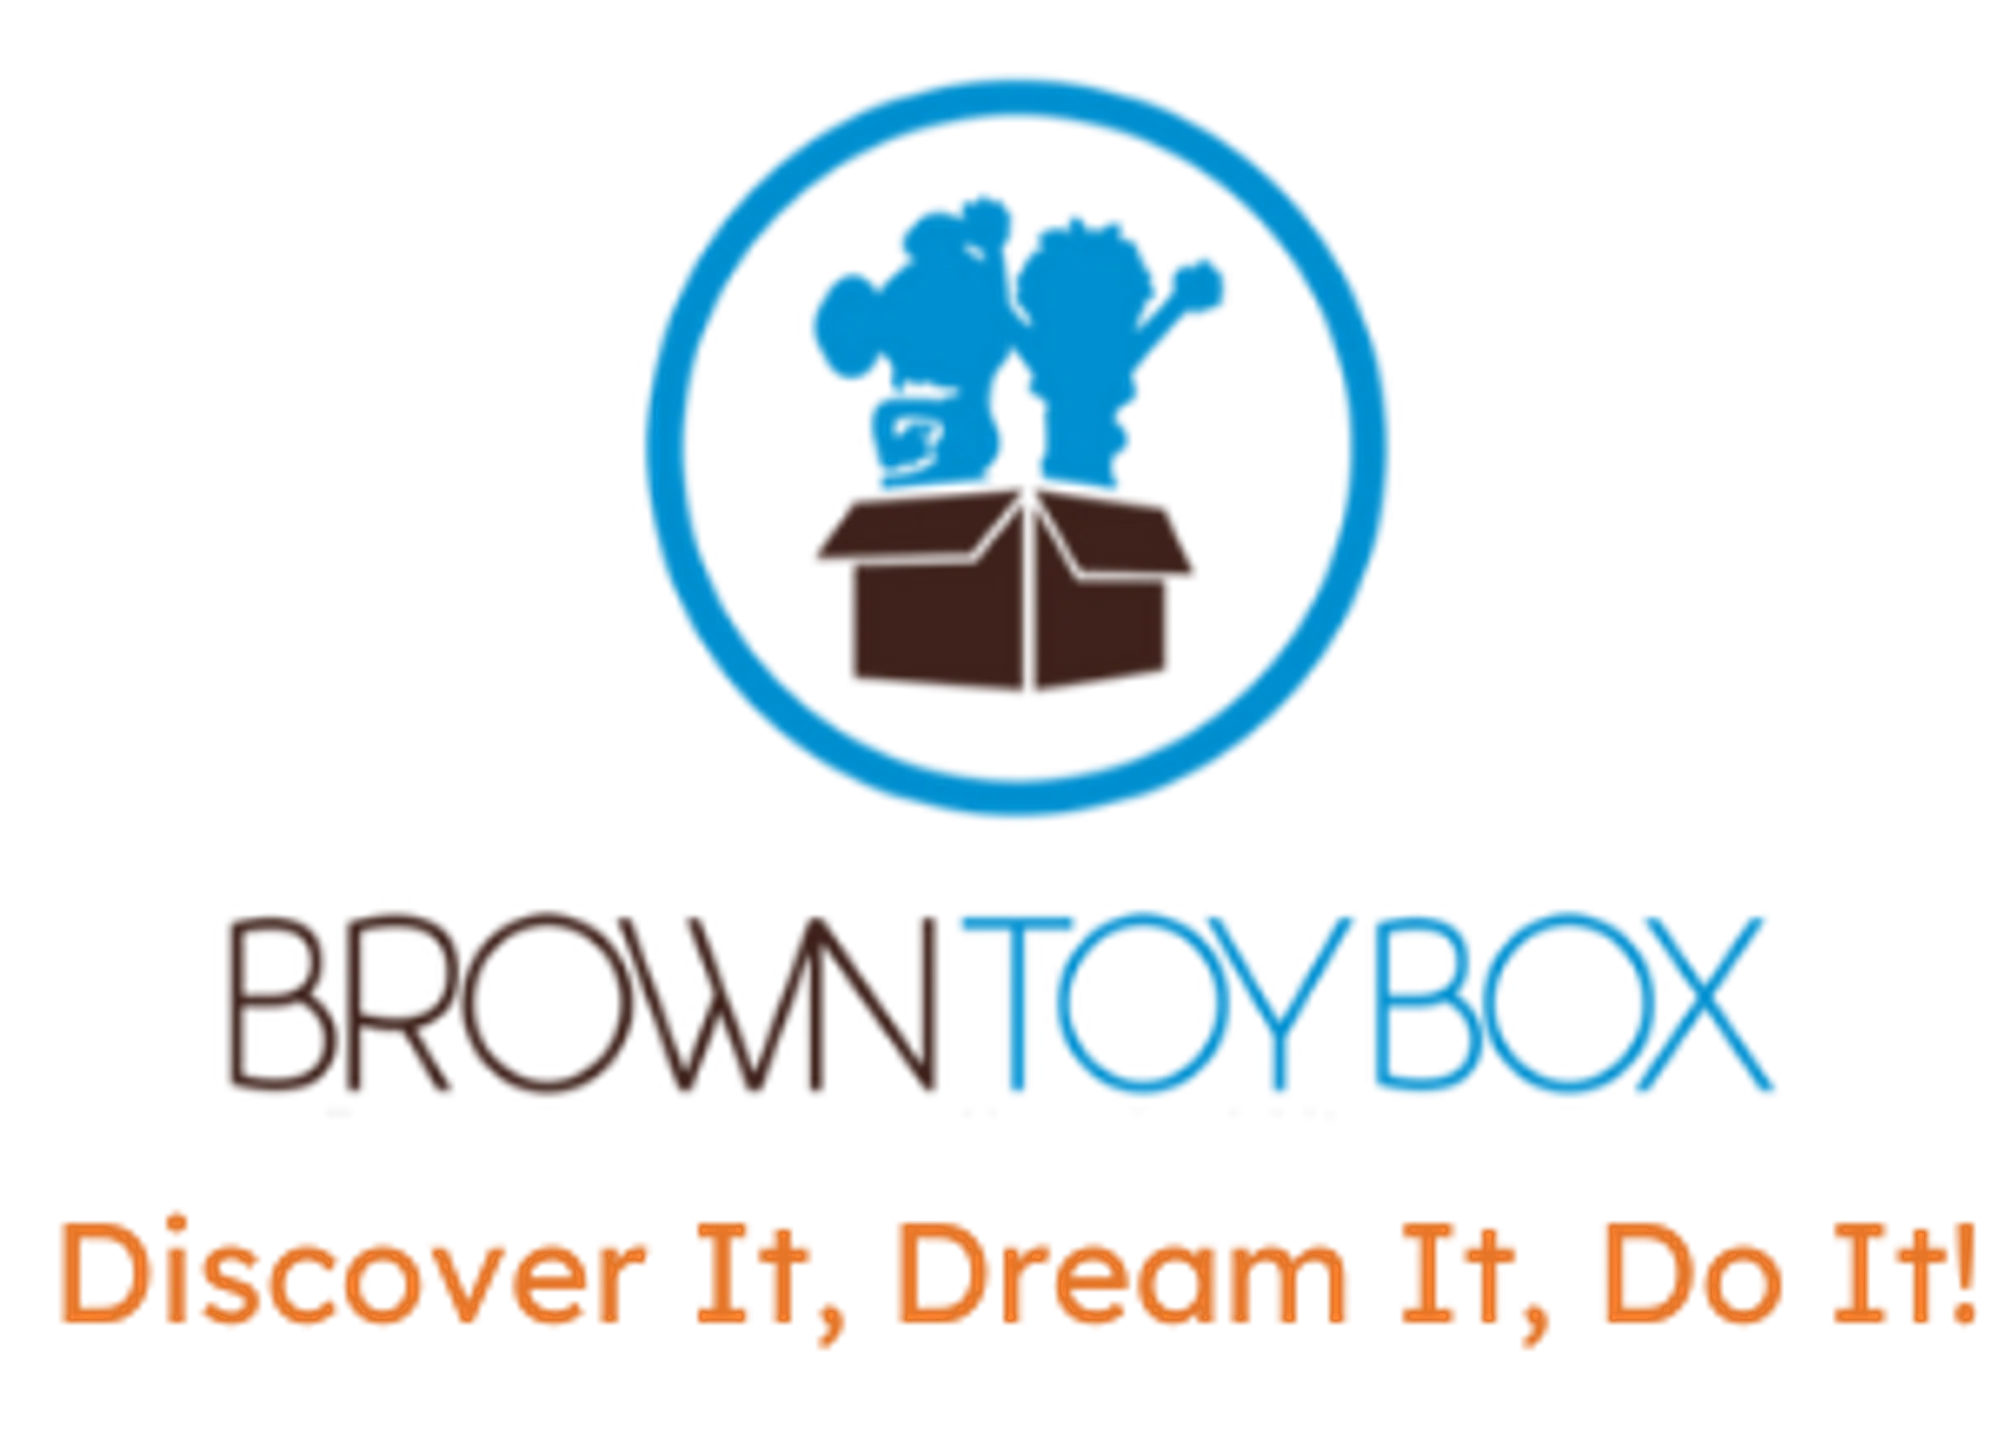 Brown Toy Box